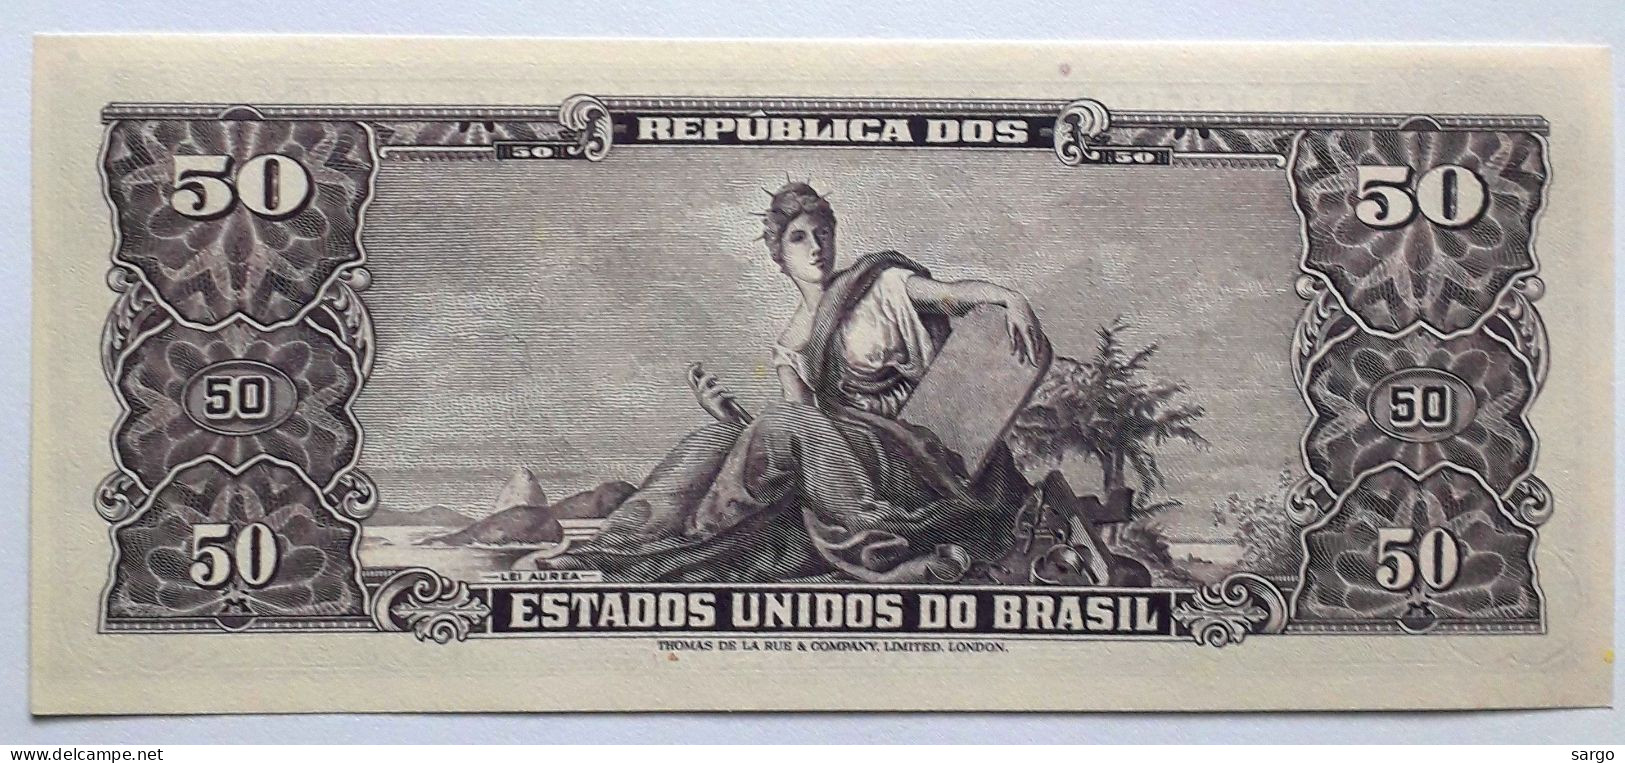 BRAZIL - 50 CRUZEIROS - P  184 B  (1966-1967) - UNC - BANKNOTES - PAPER MONEY - CARTAMONETA - - Brasilien